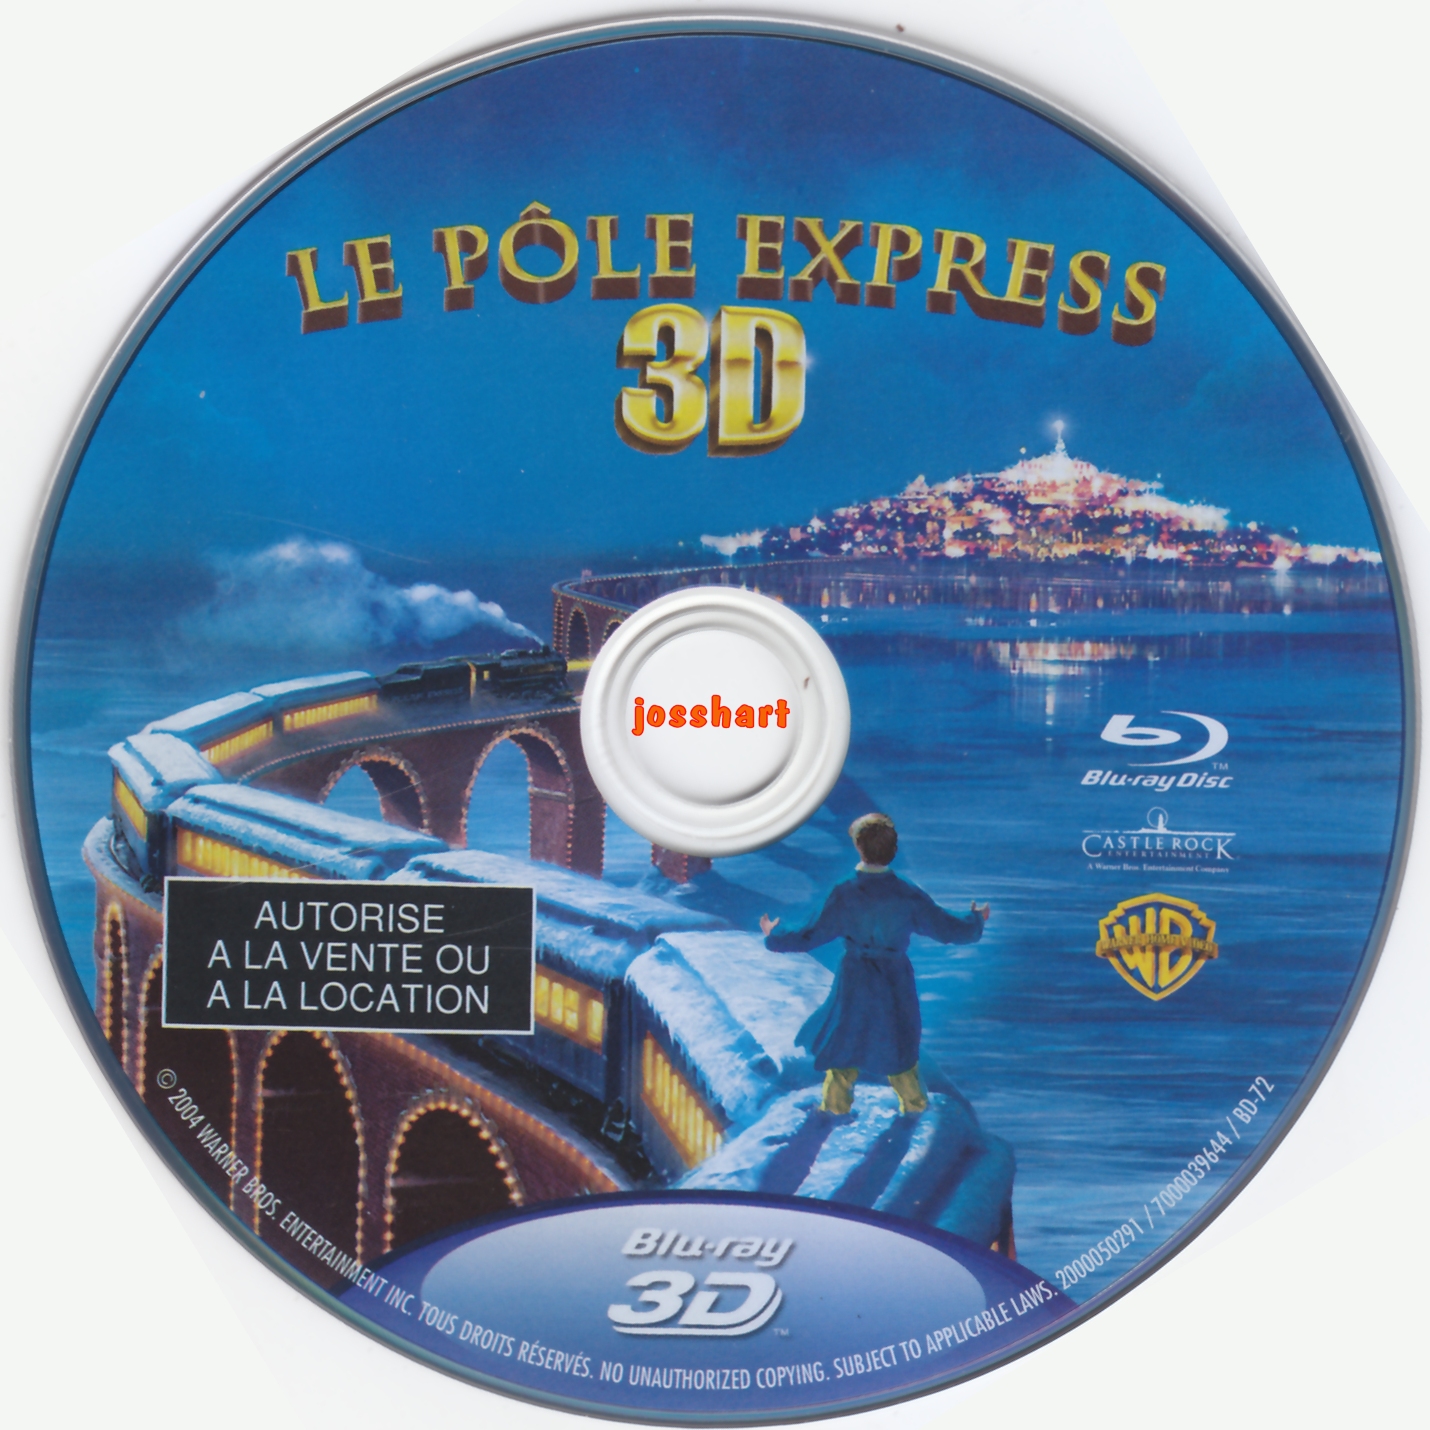 Le pole express 3D (BLU-RAY)